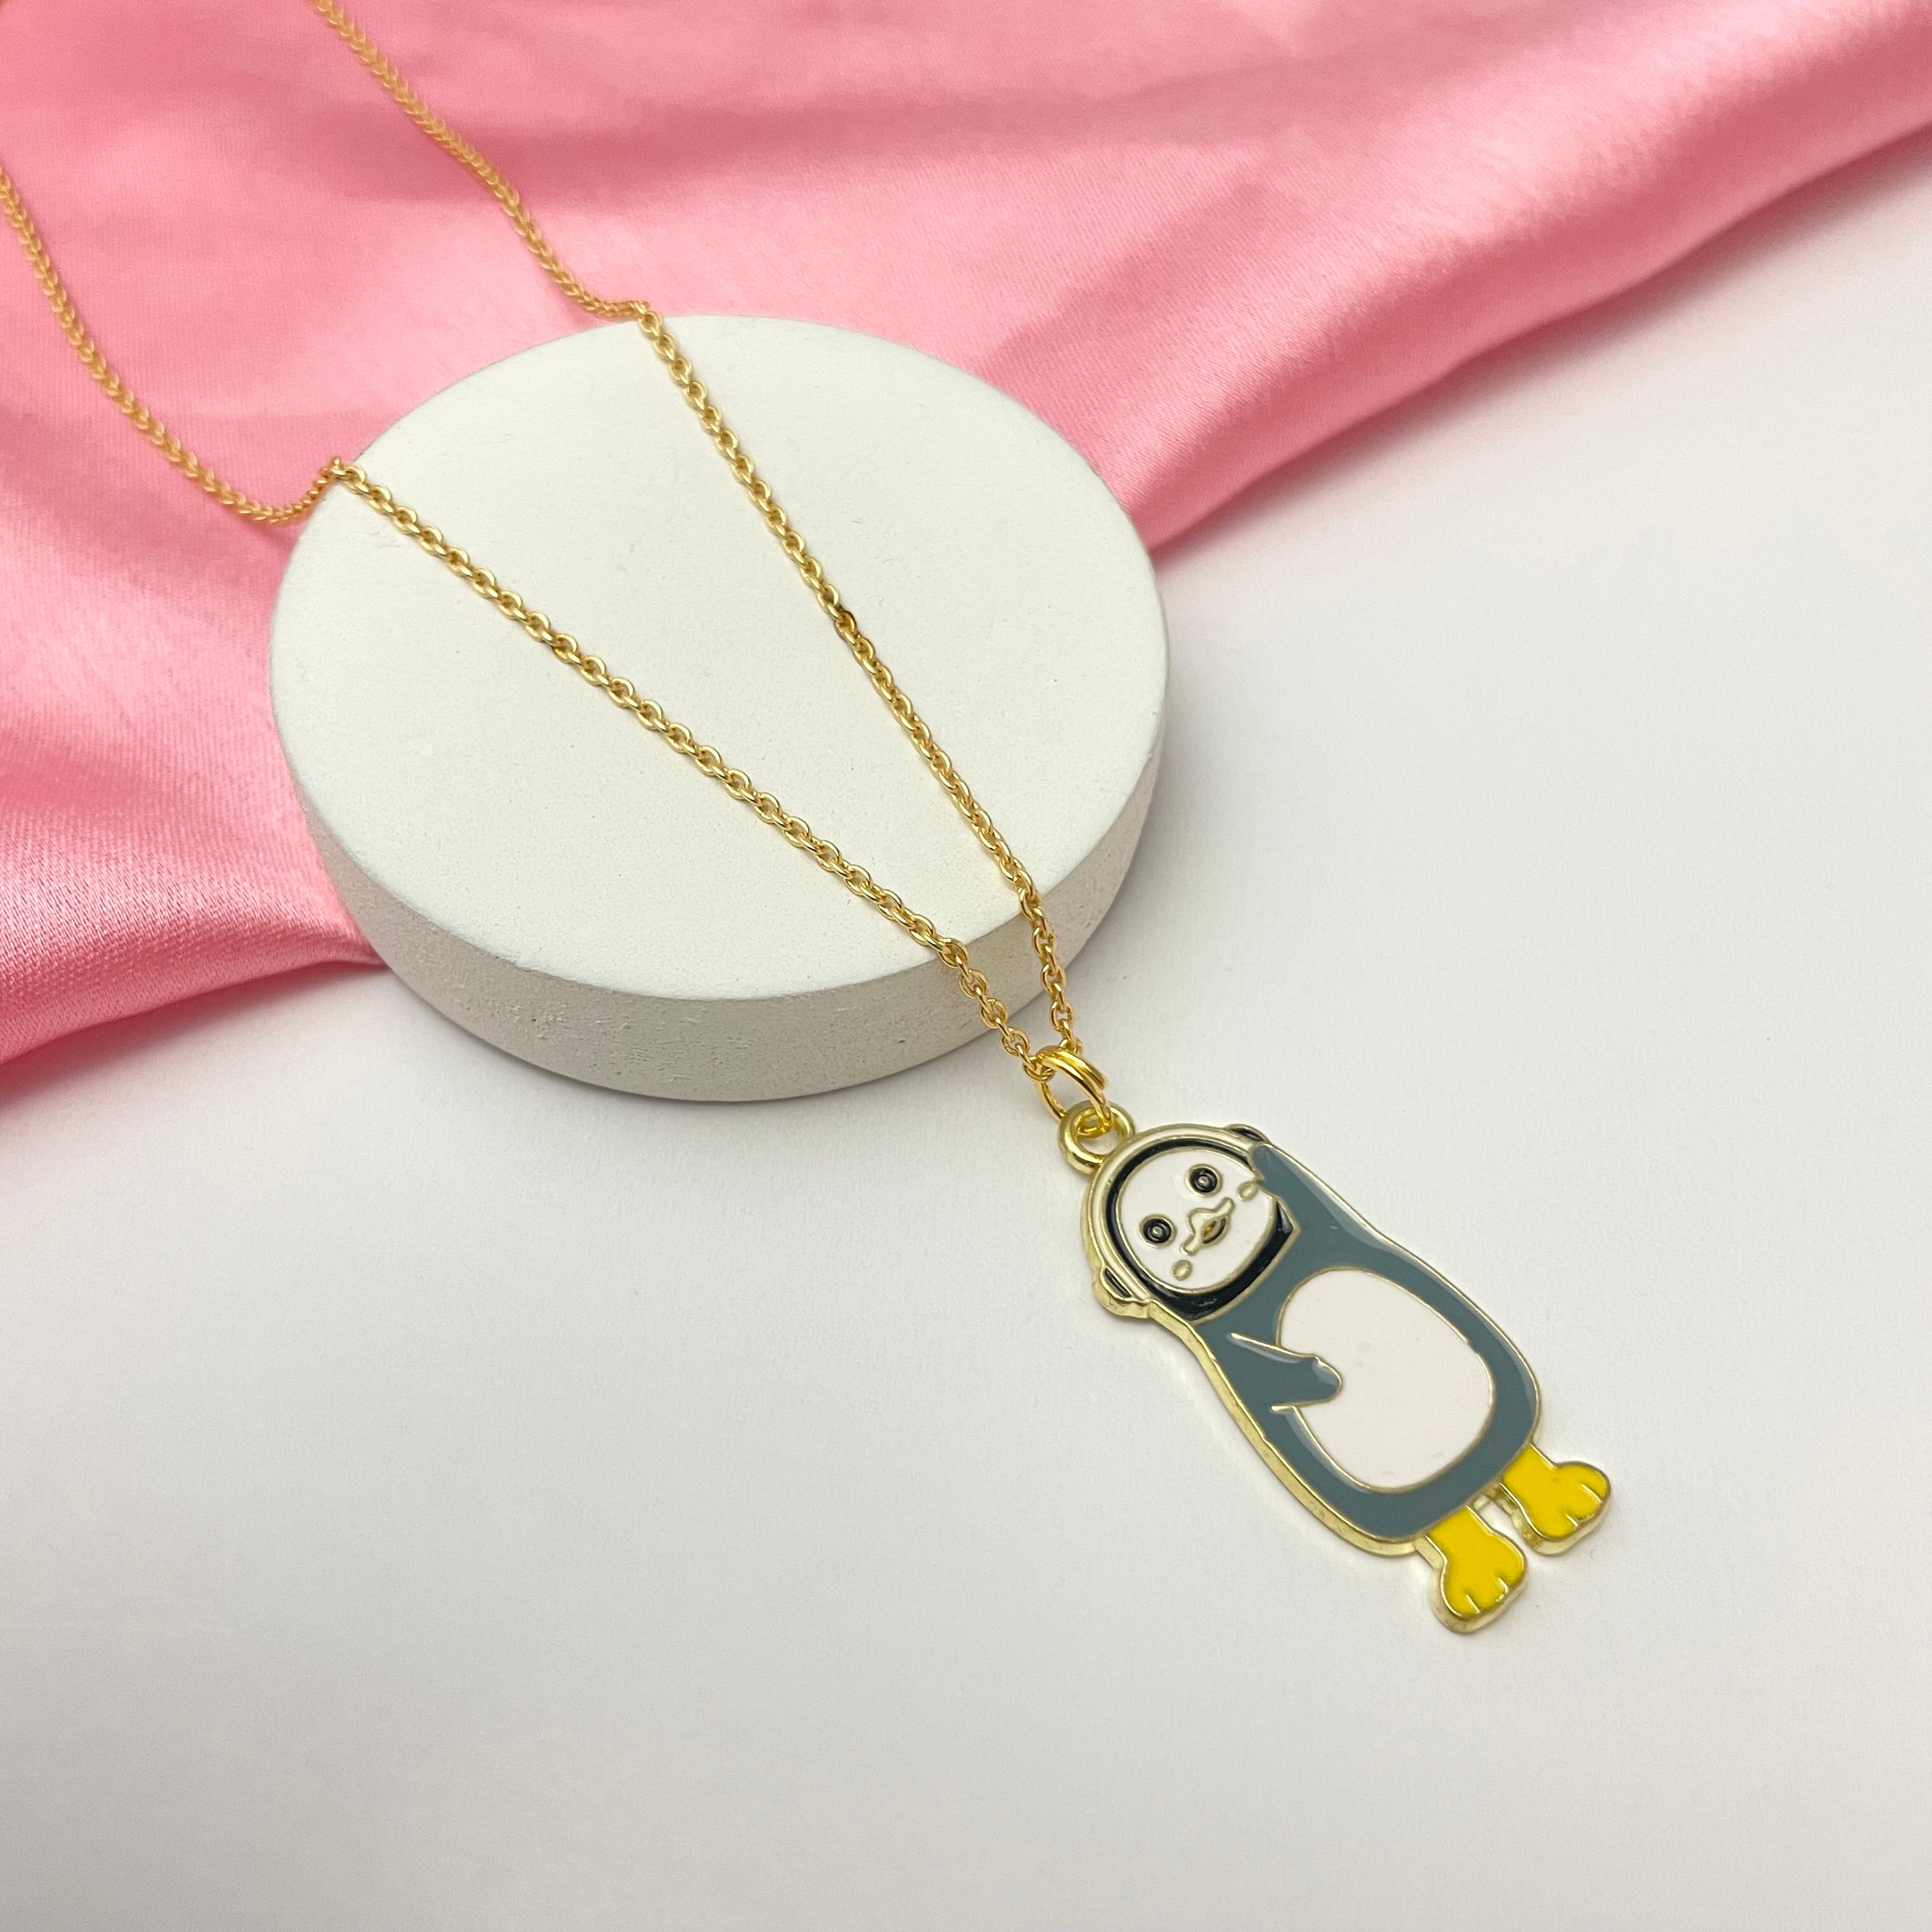 Penguin Necklace Be Kind Hug A Penguin Theme Friendship Jewelry